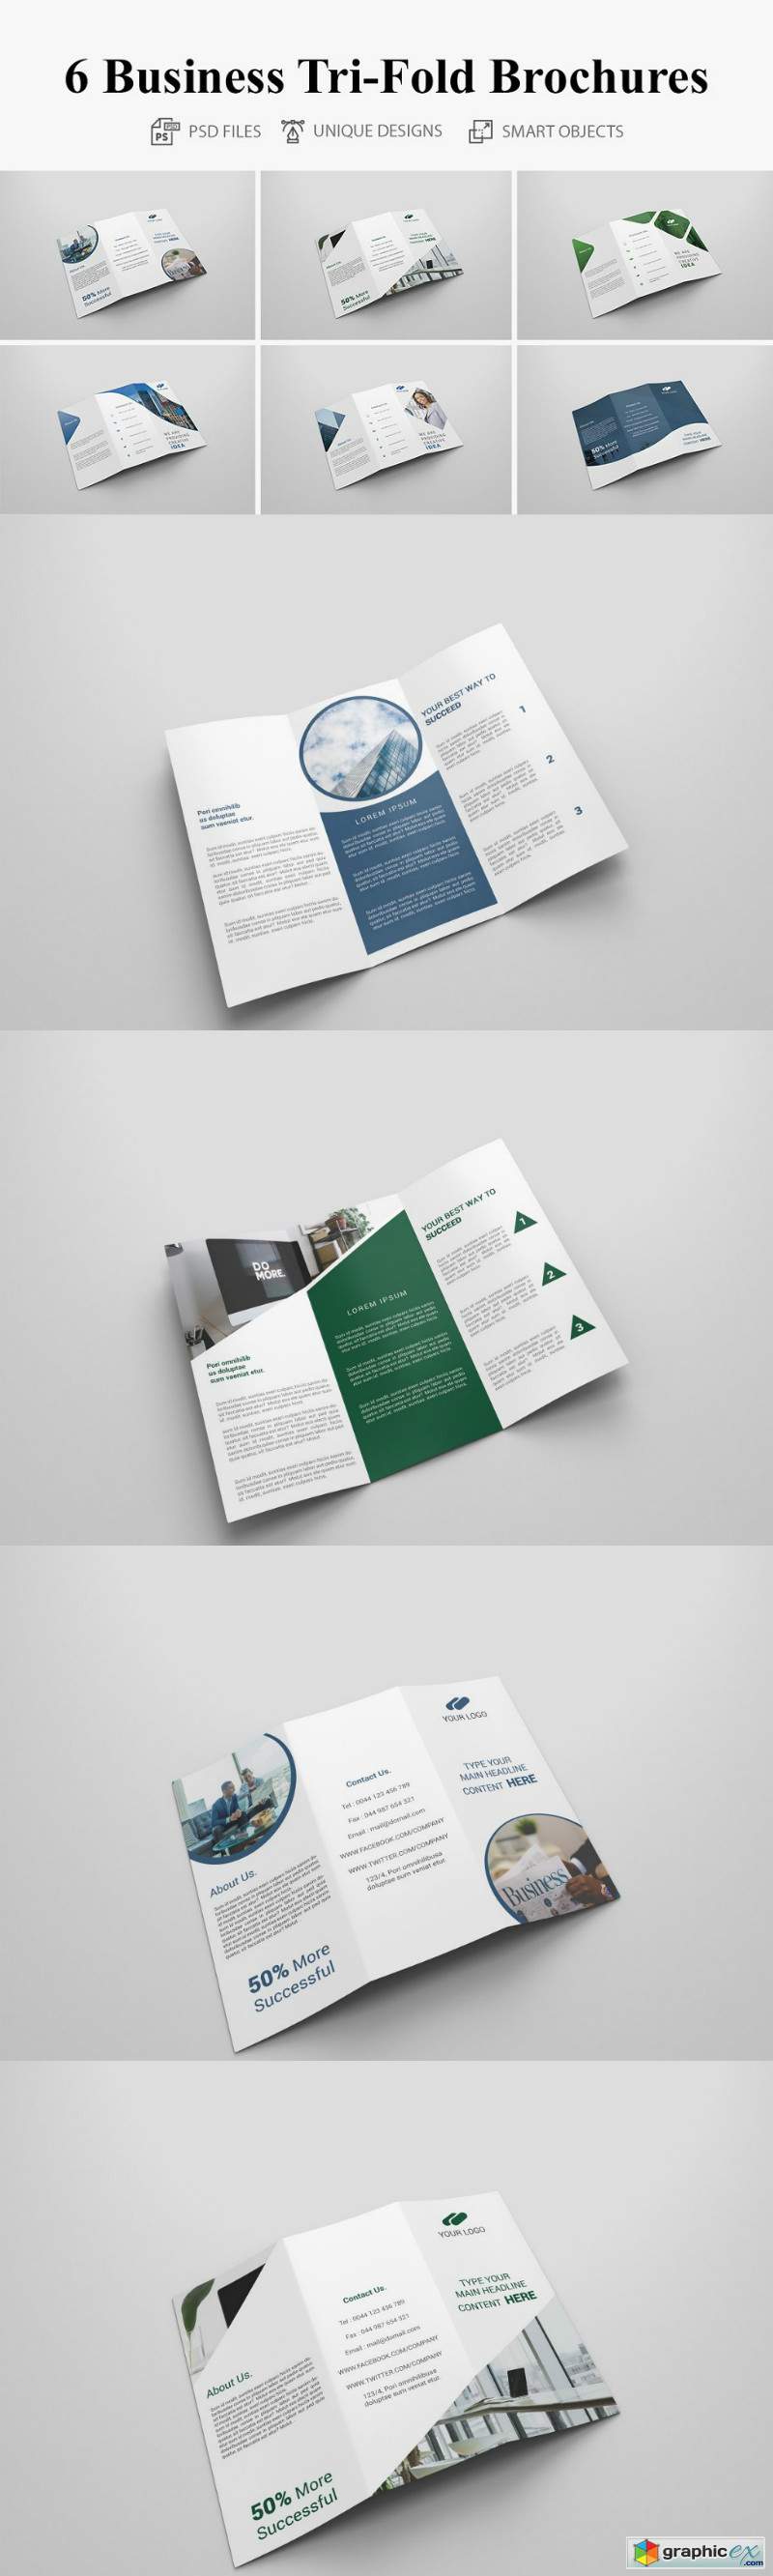 6 Business Tri-fold Brochures